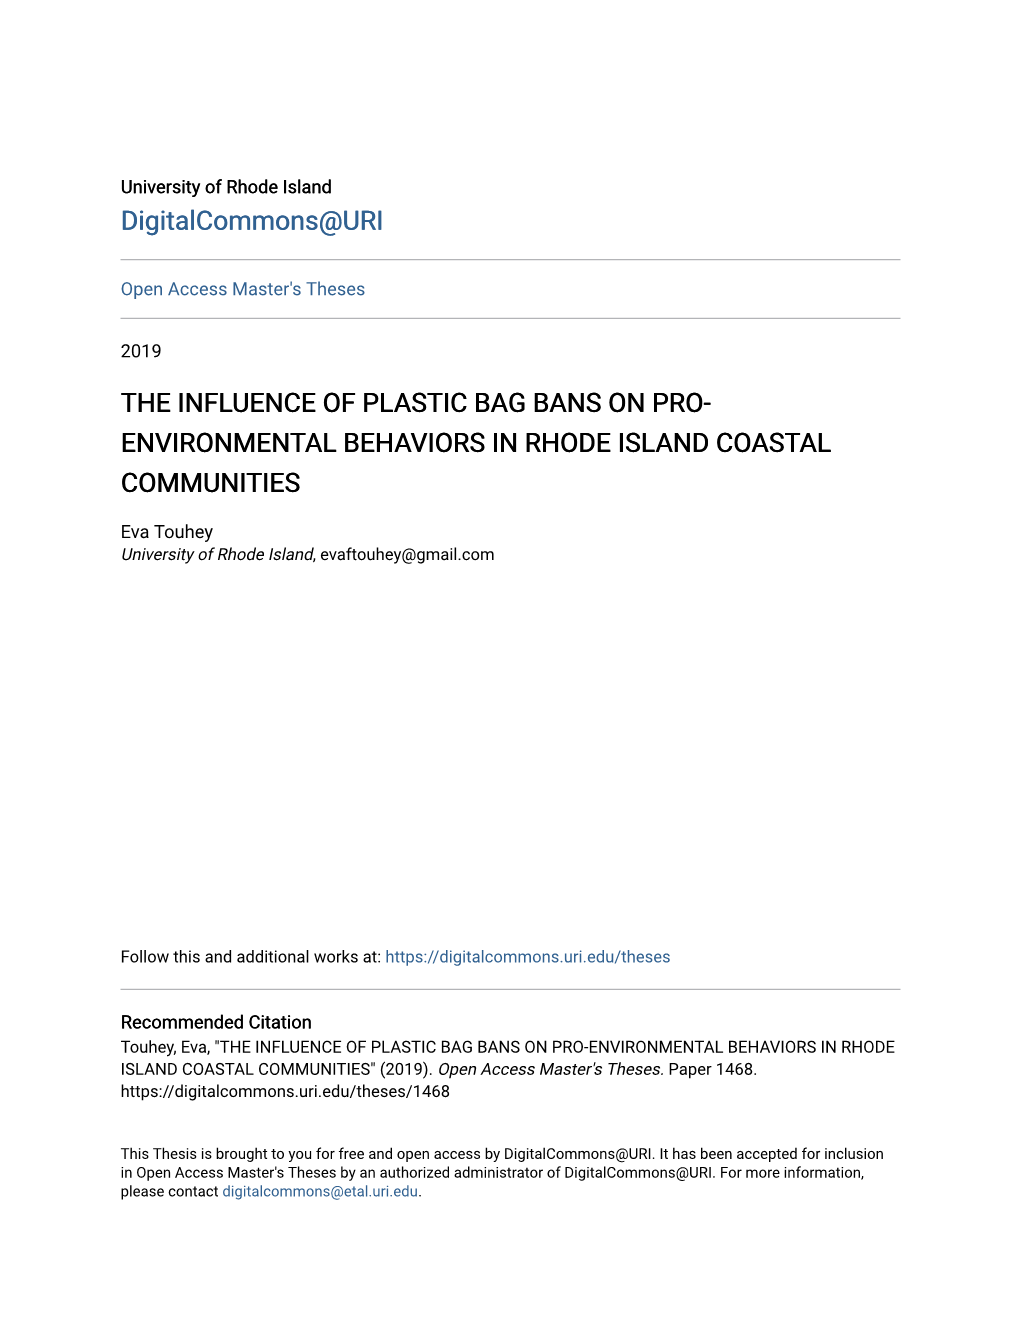 The Influence of Plastic Bag Bans on Pro-Environmental Behaviors in Rhode Island Coastal Communities" (2019)